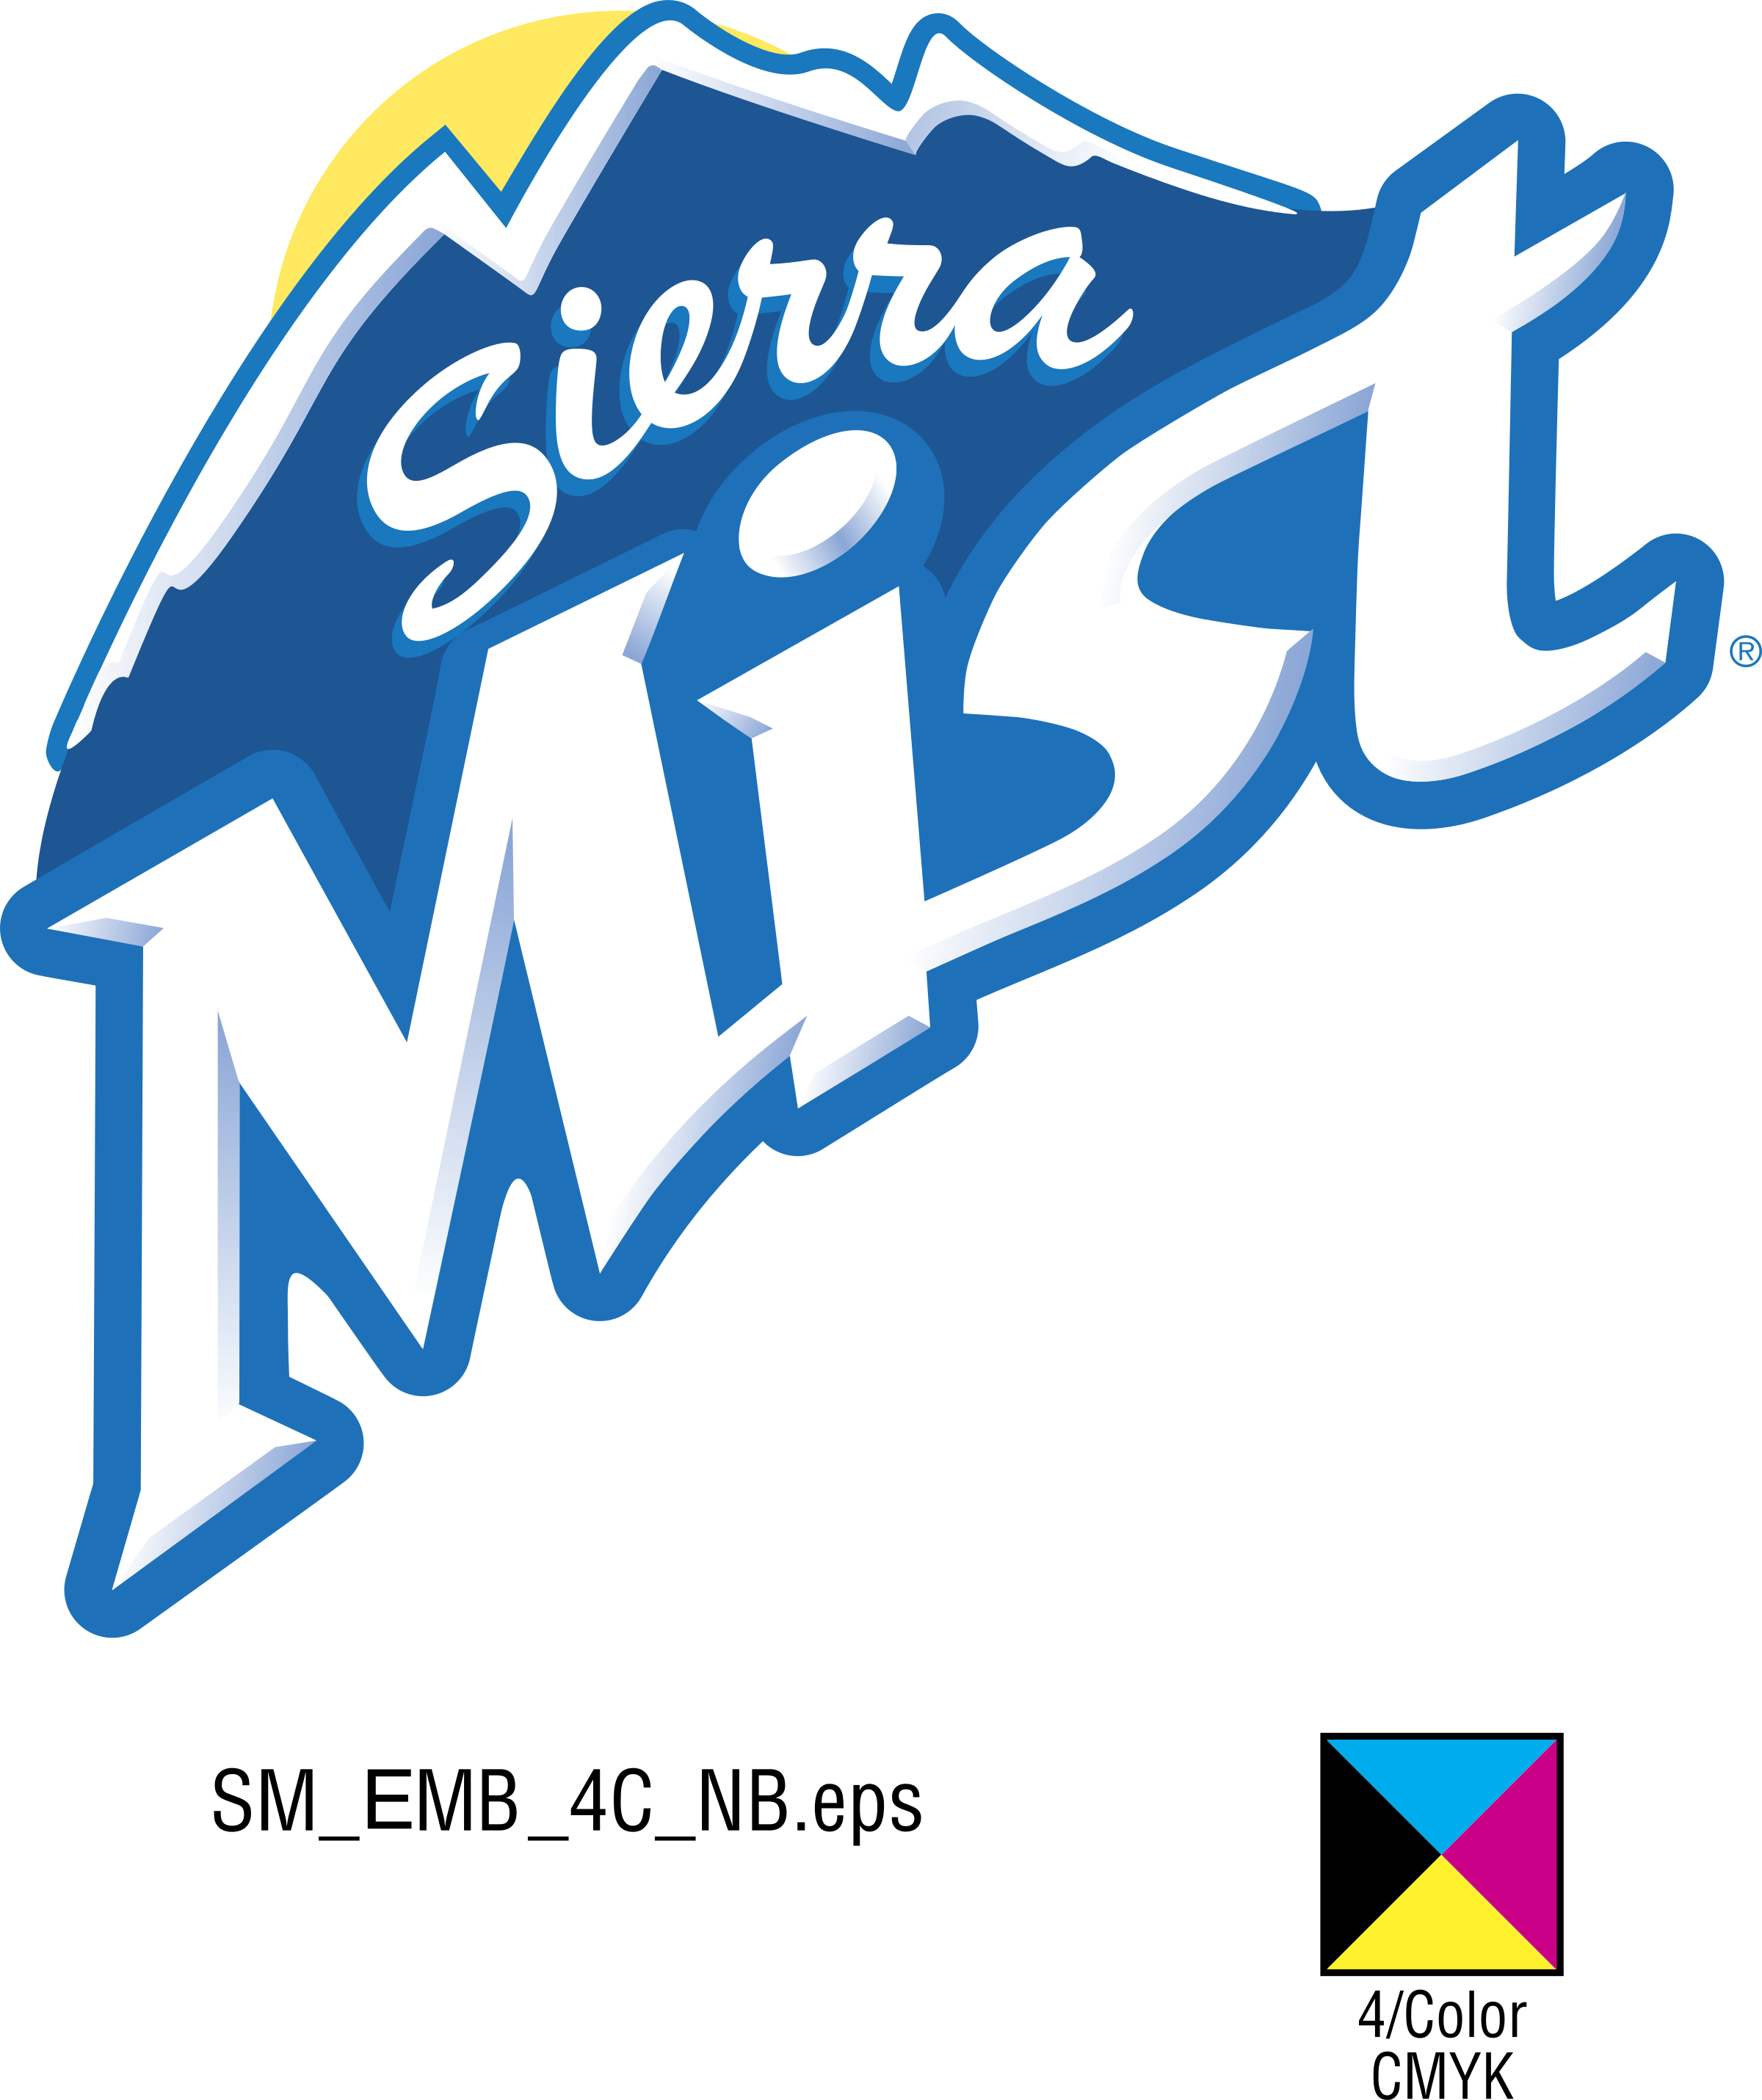 Sierra Mist Logo - Sierra Mist Logo PNG Transparent & SVG Vector - Freebie Supply